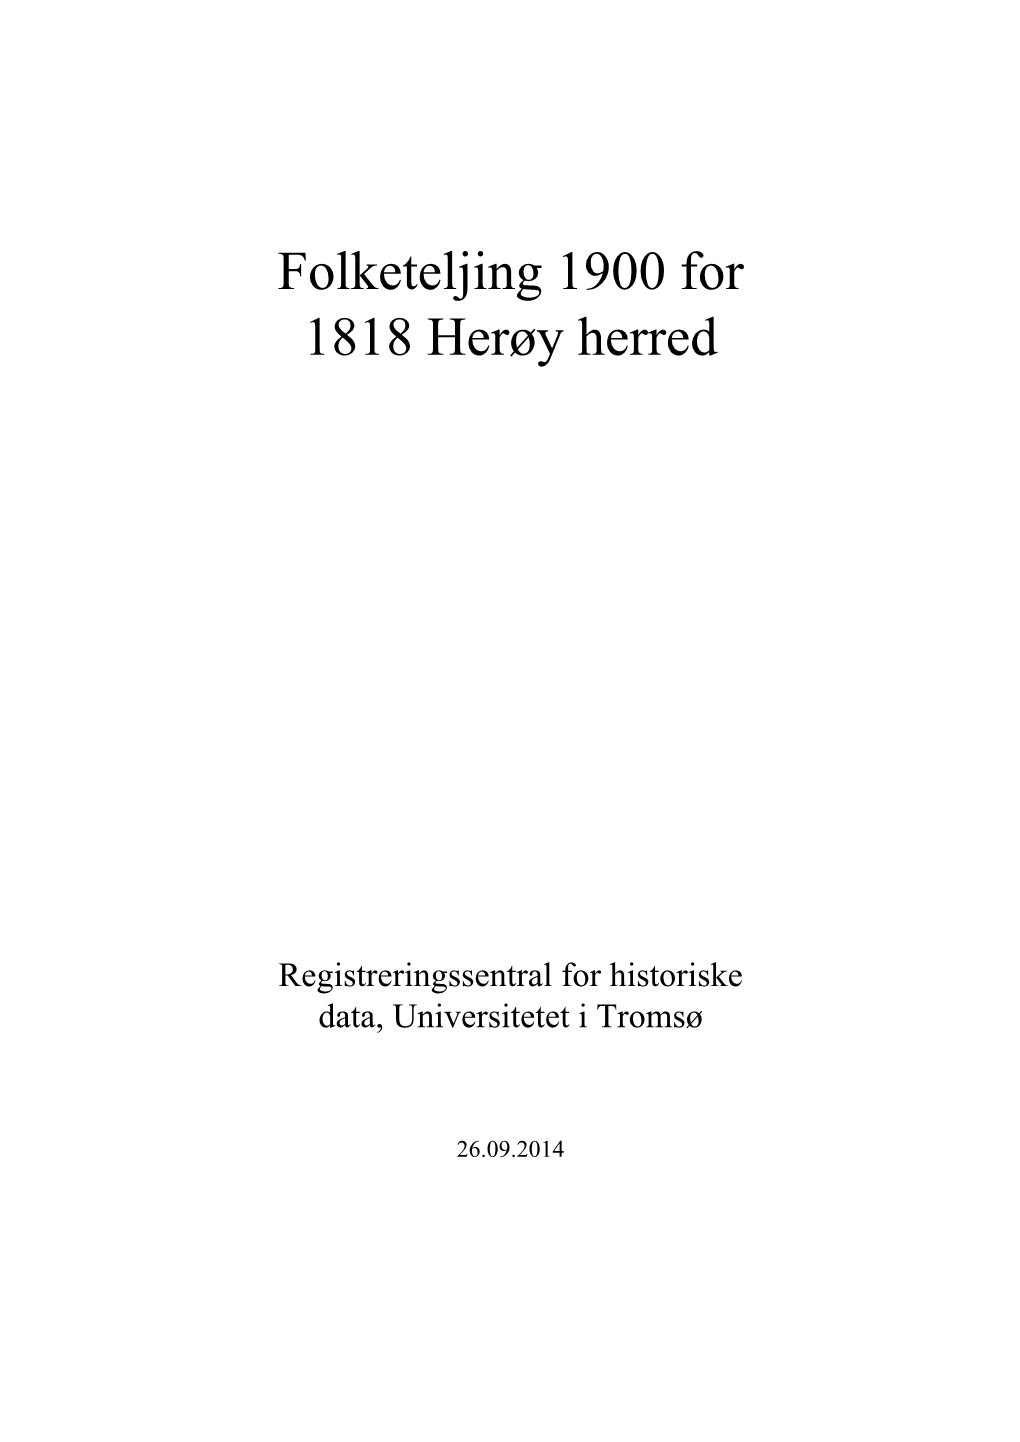 Folketeljing 1900 for 1818 Herøy Herred